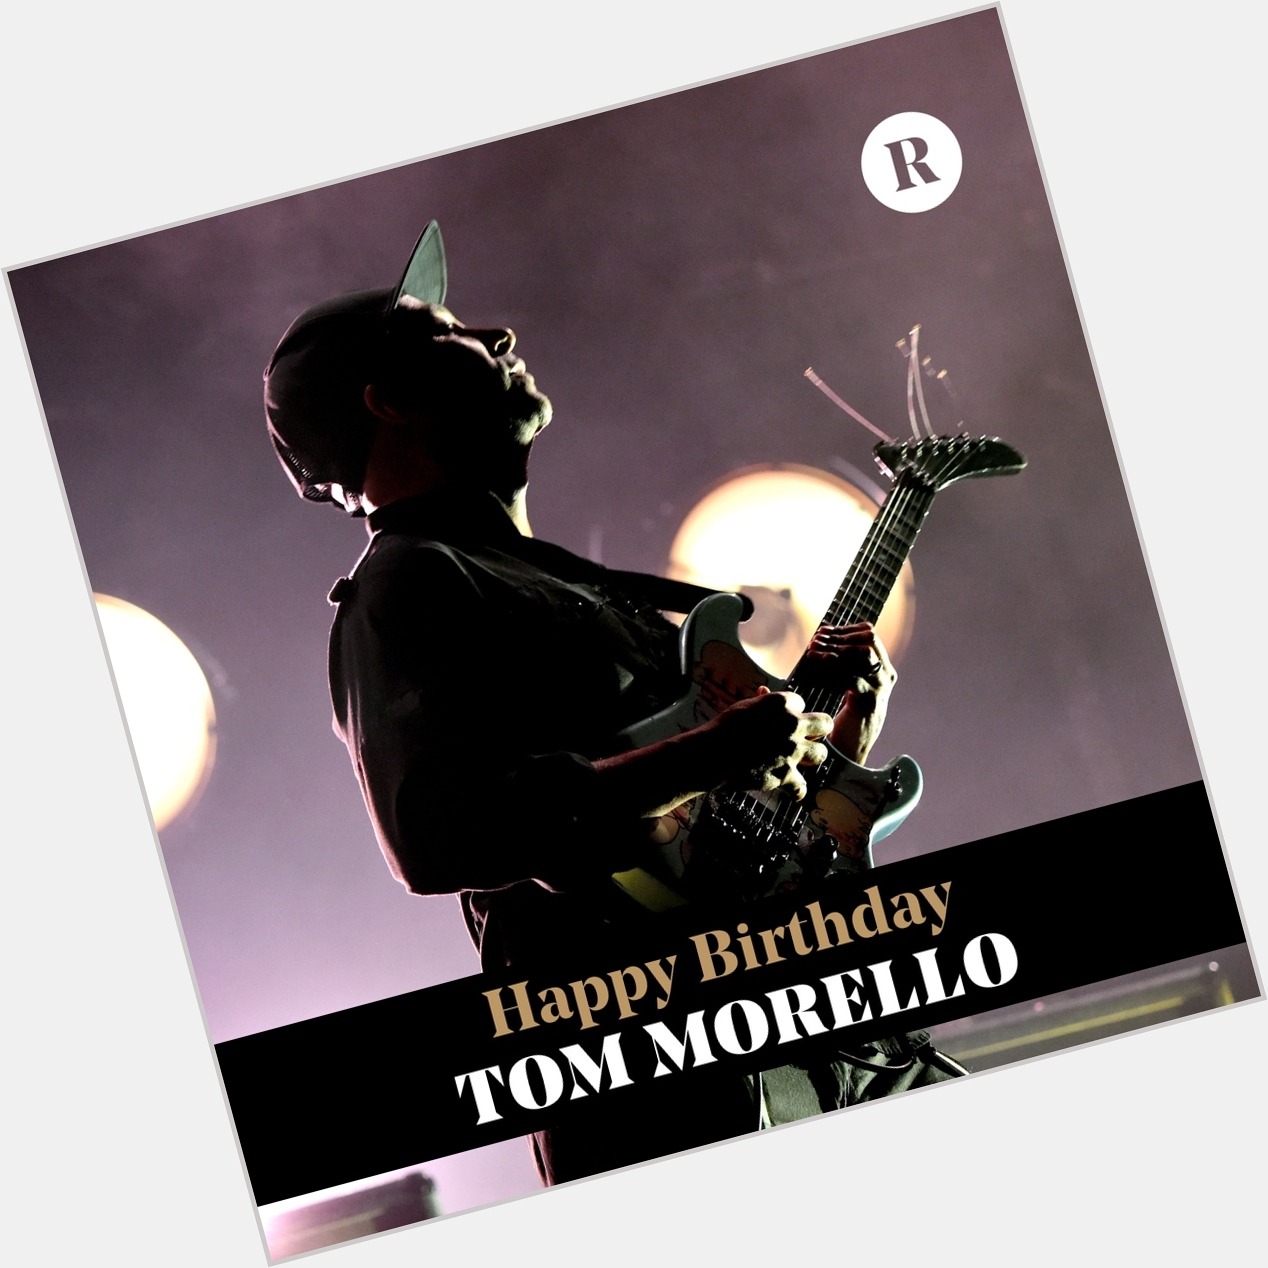  Happy birthday, Tom Morello!

What\s your favorite Rage Against the Machine riff? 